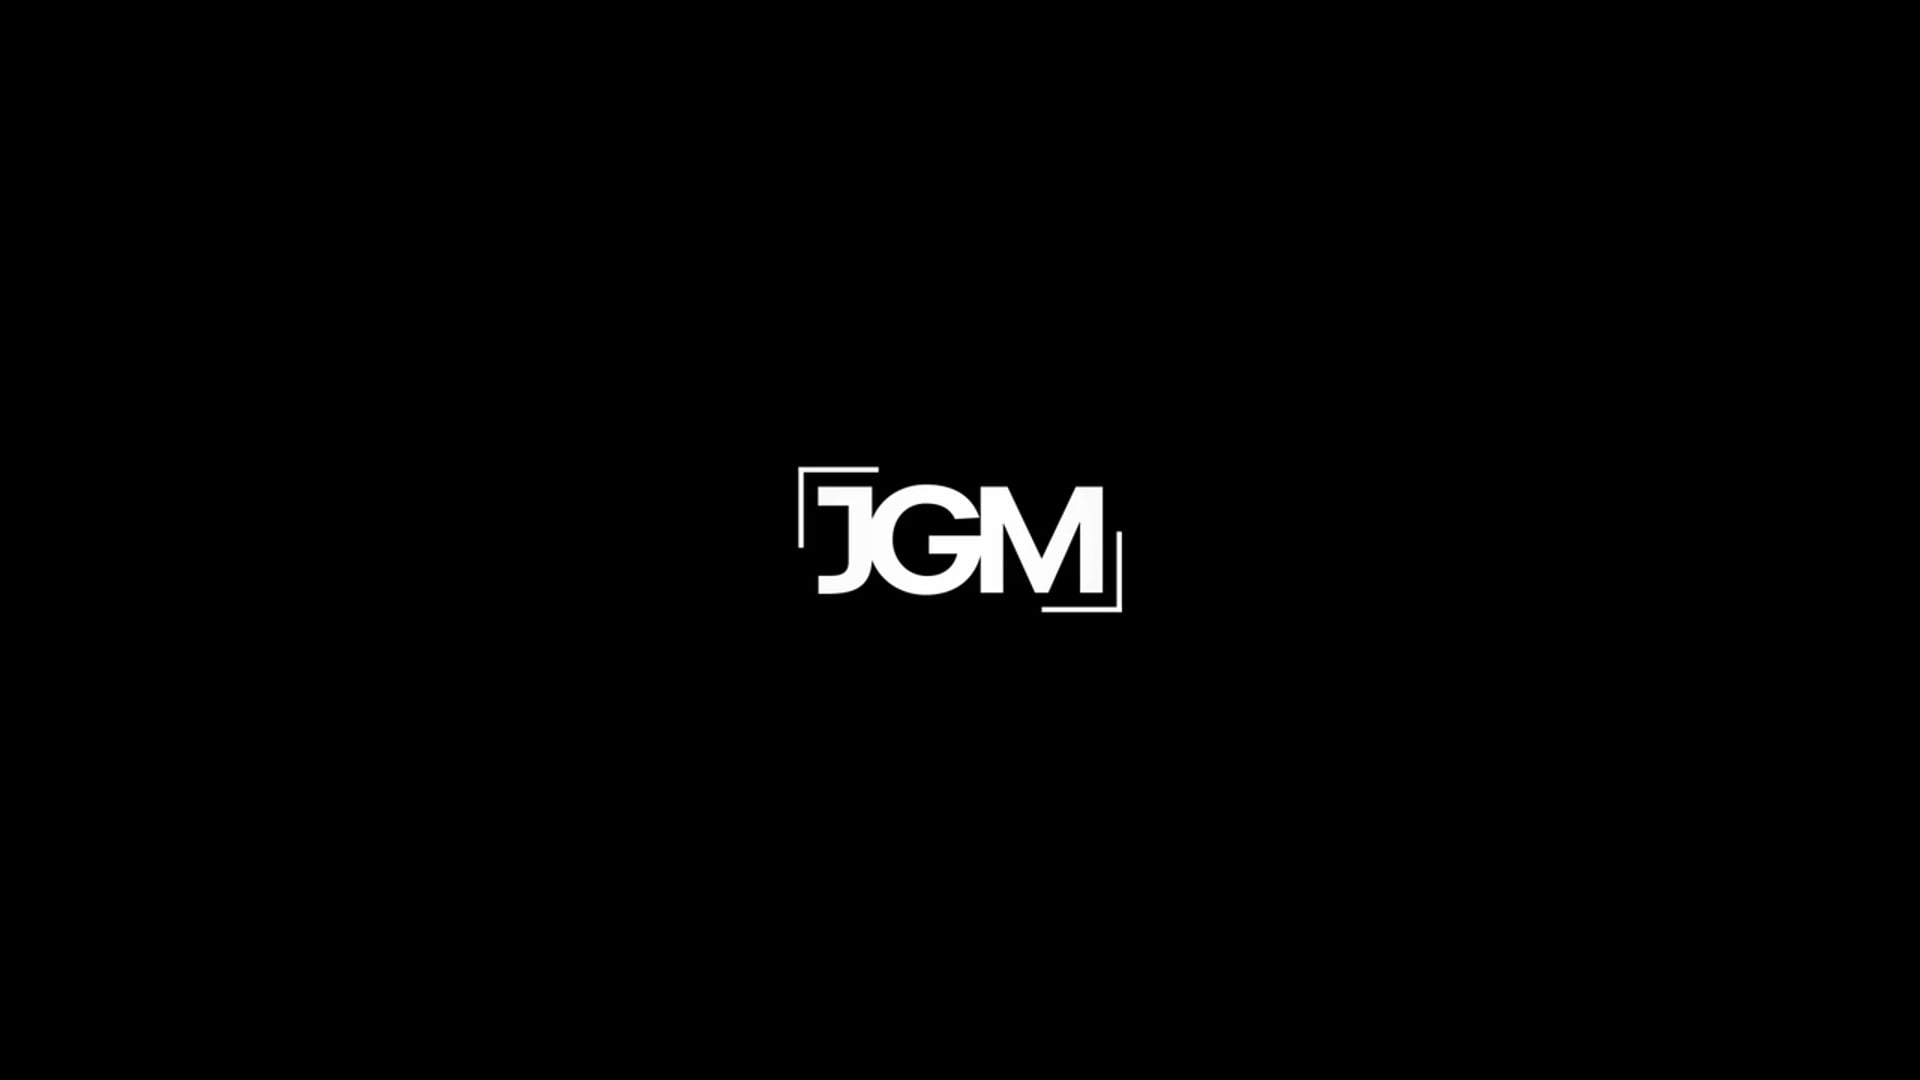 Introducing the New JGM Monitors